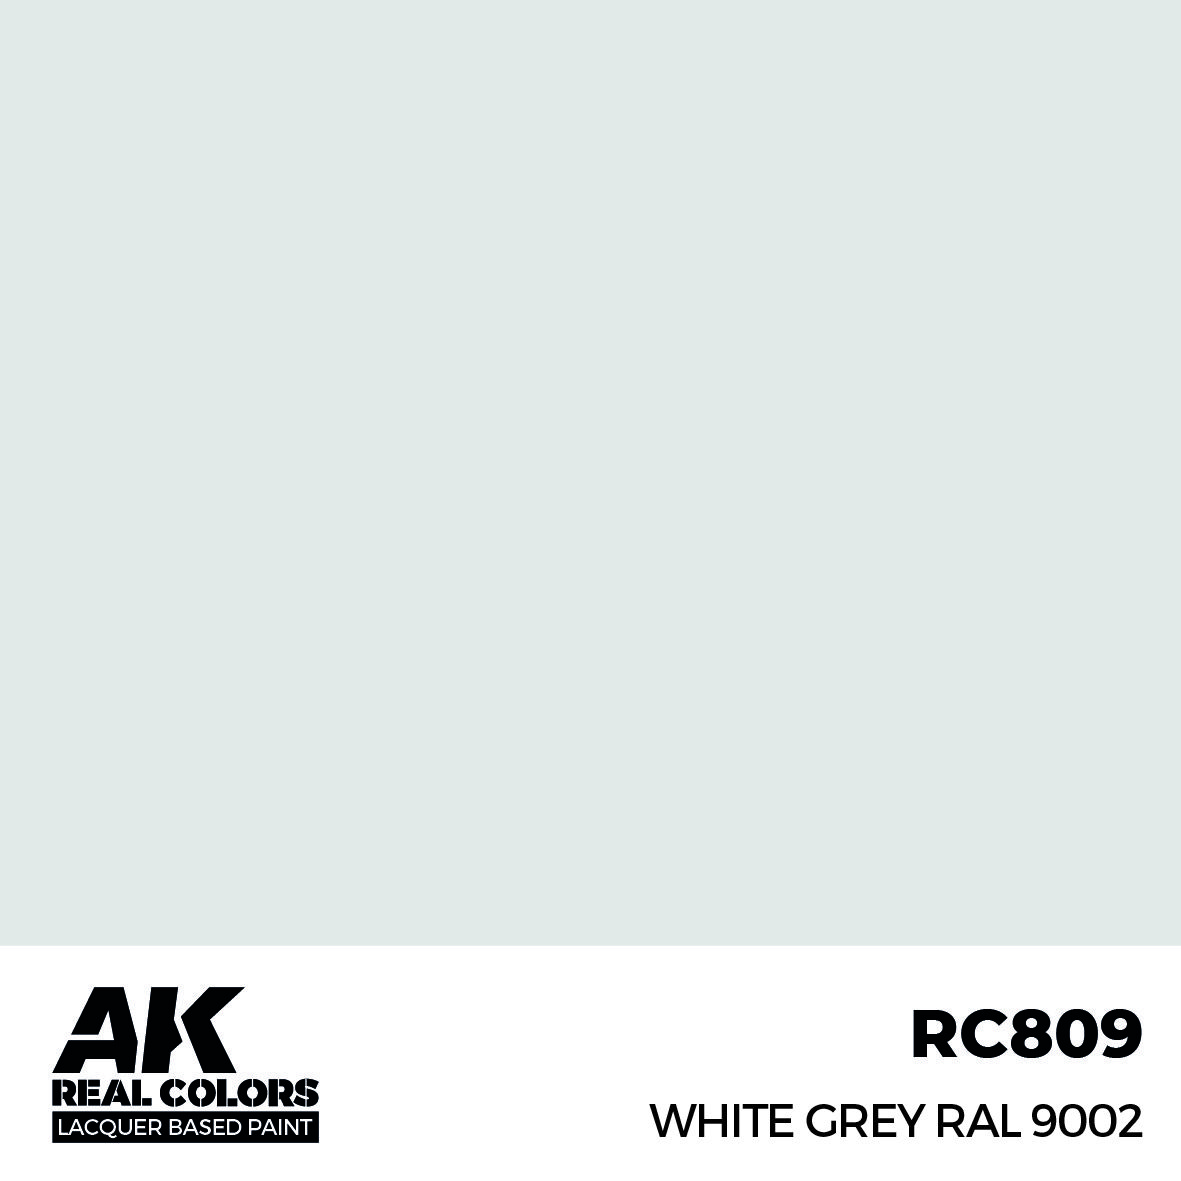 White Grey RAL 9002 17 ml.